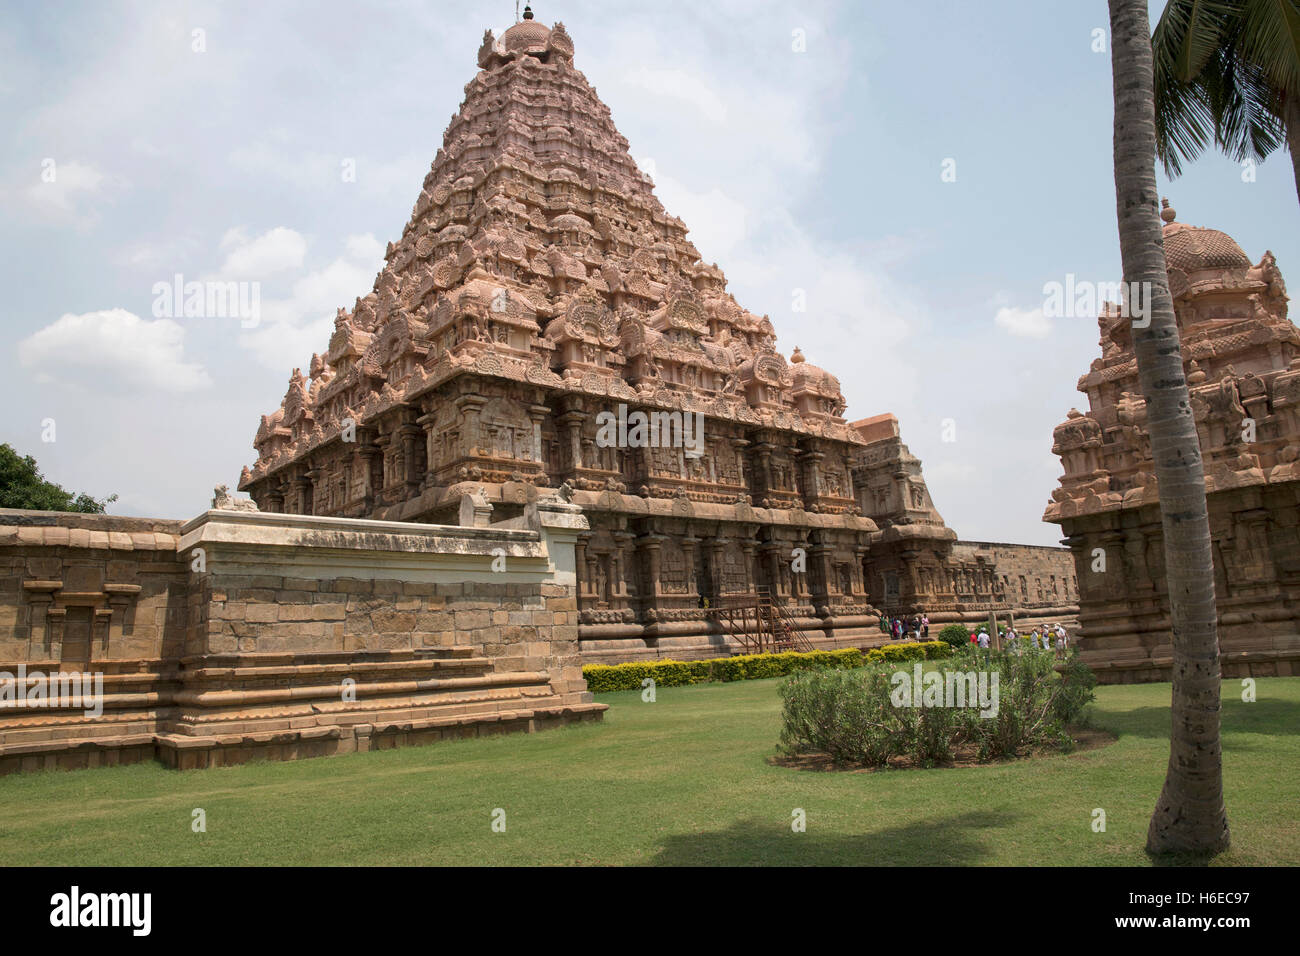 Temple de Brihadisvara, gangaikondacholapuram, Tamil Nadu, Inde. vue depuis le sud-ouest. Banque D'Images